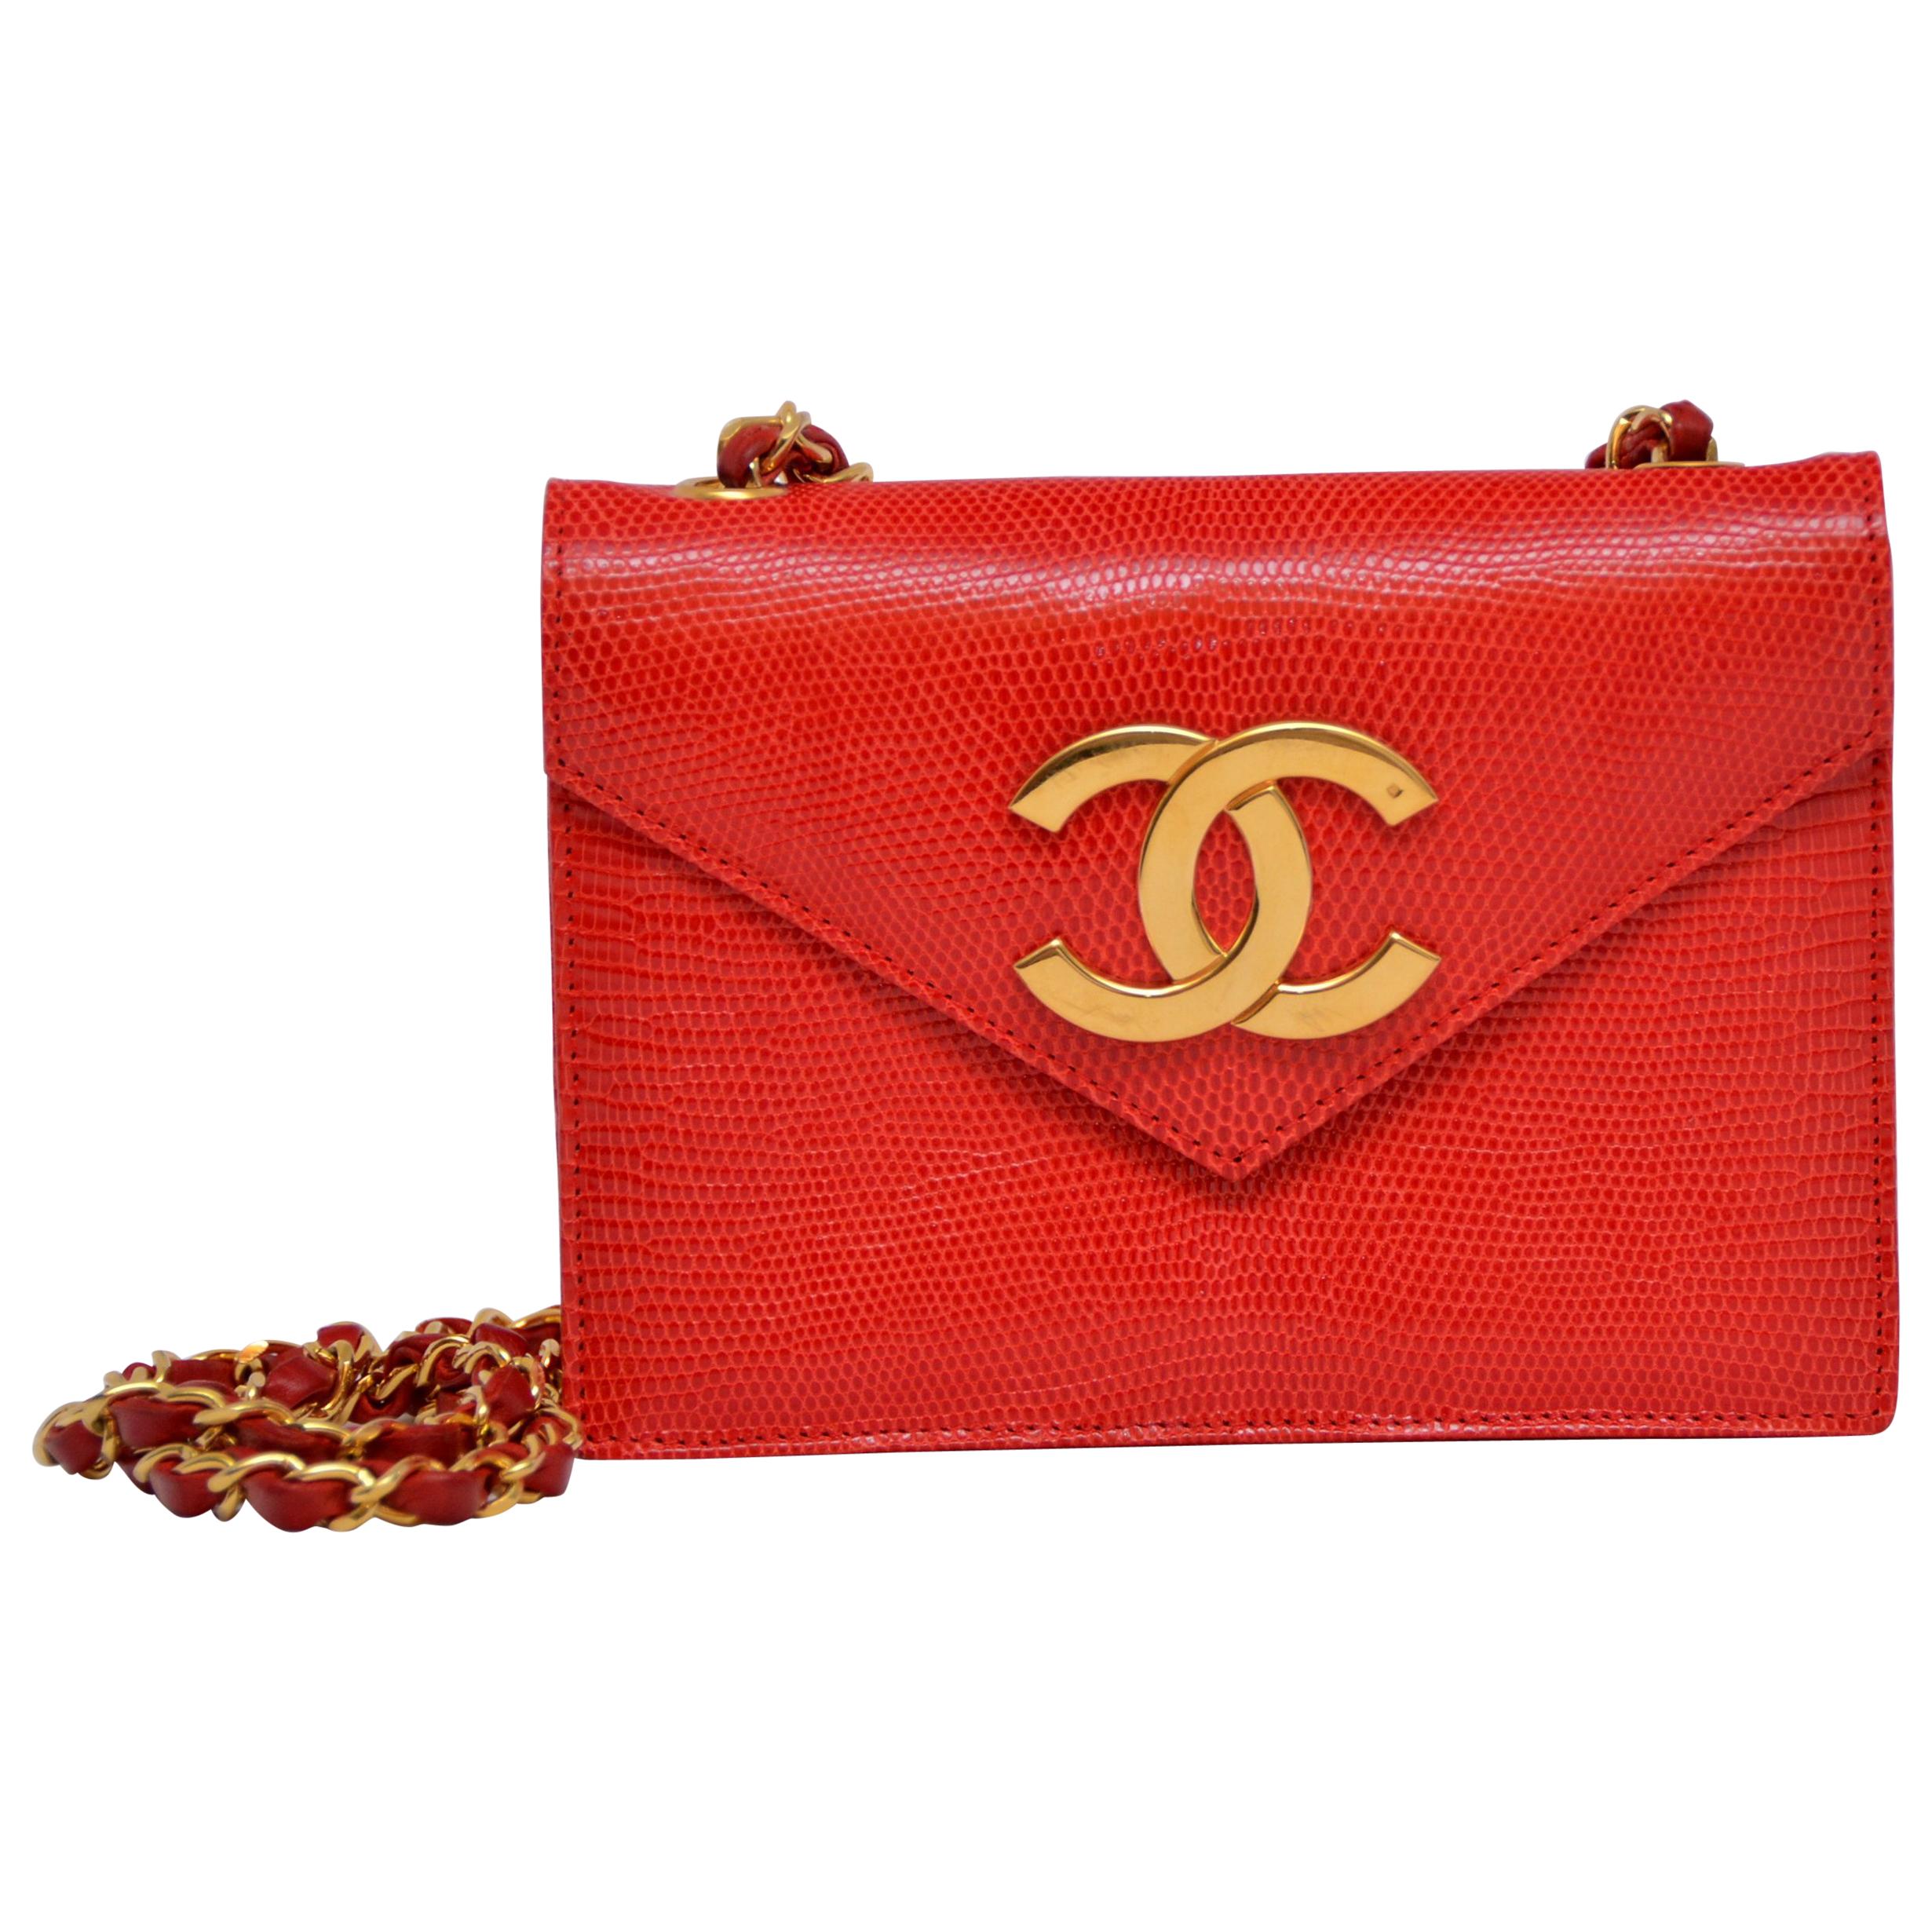 Rare Chanel Vermilion Red Lizard Mini Handbag Large Gold Plated CC 